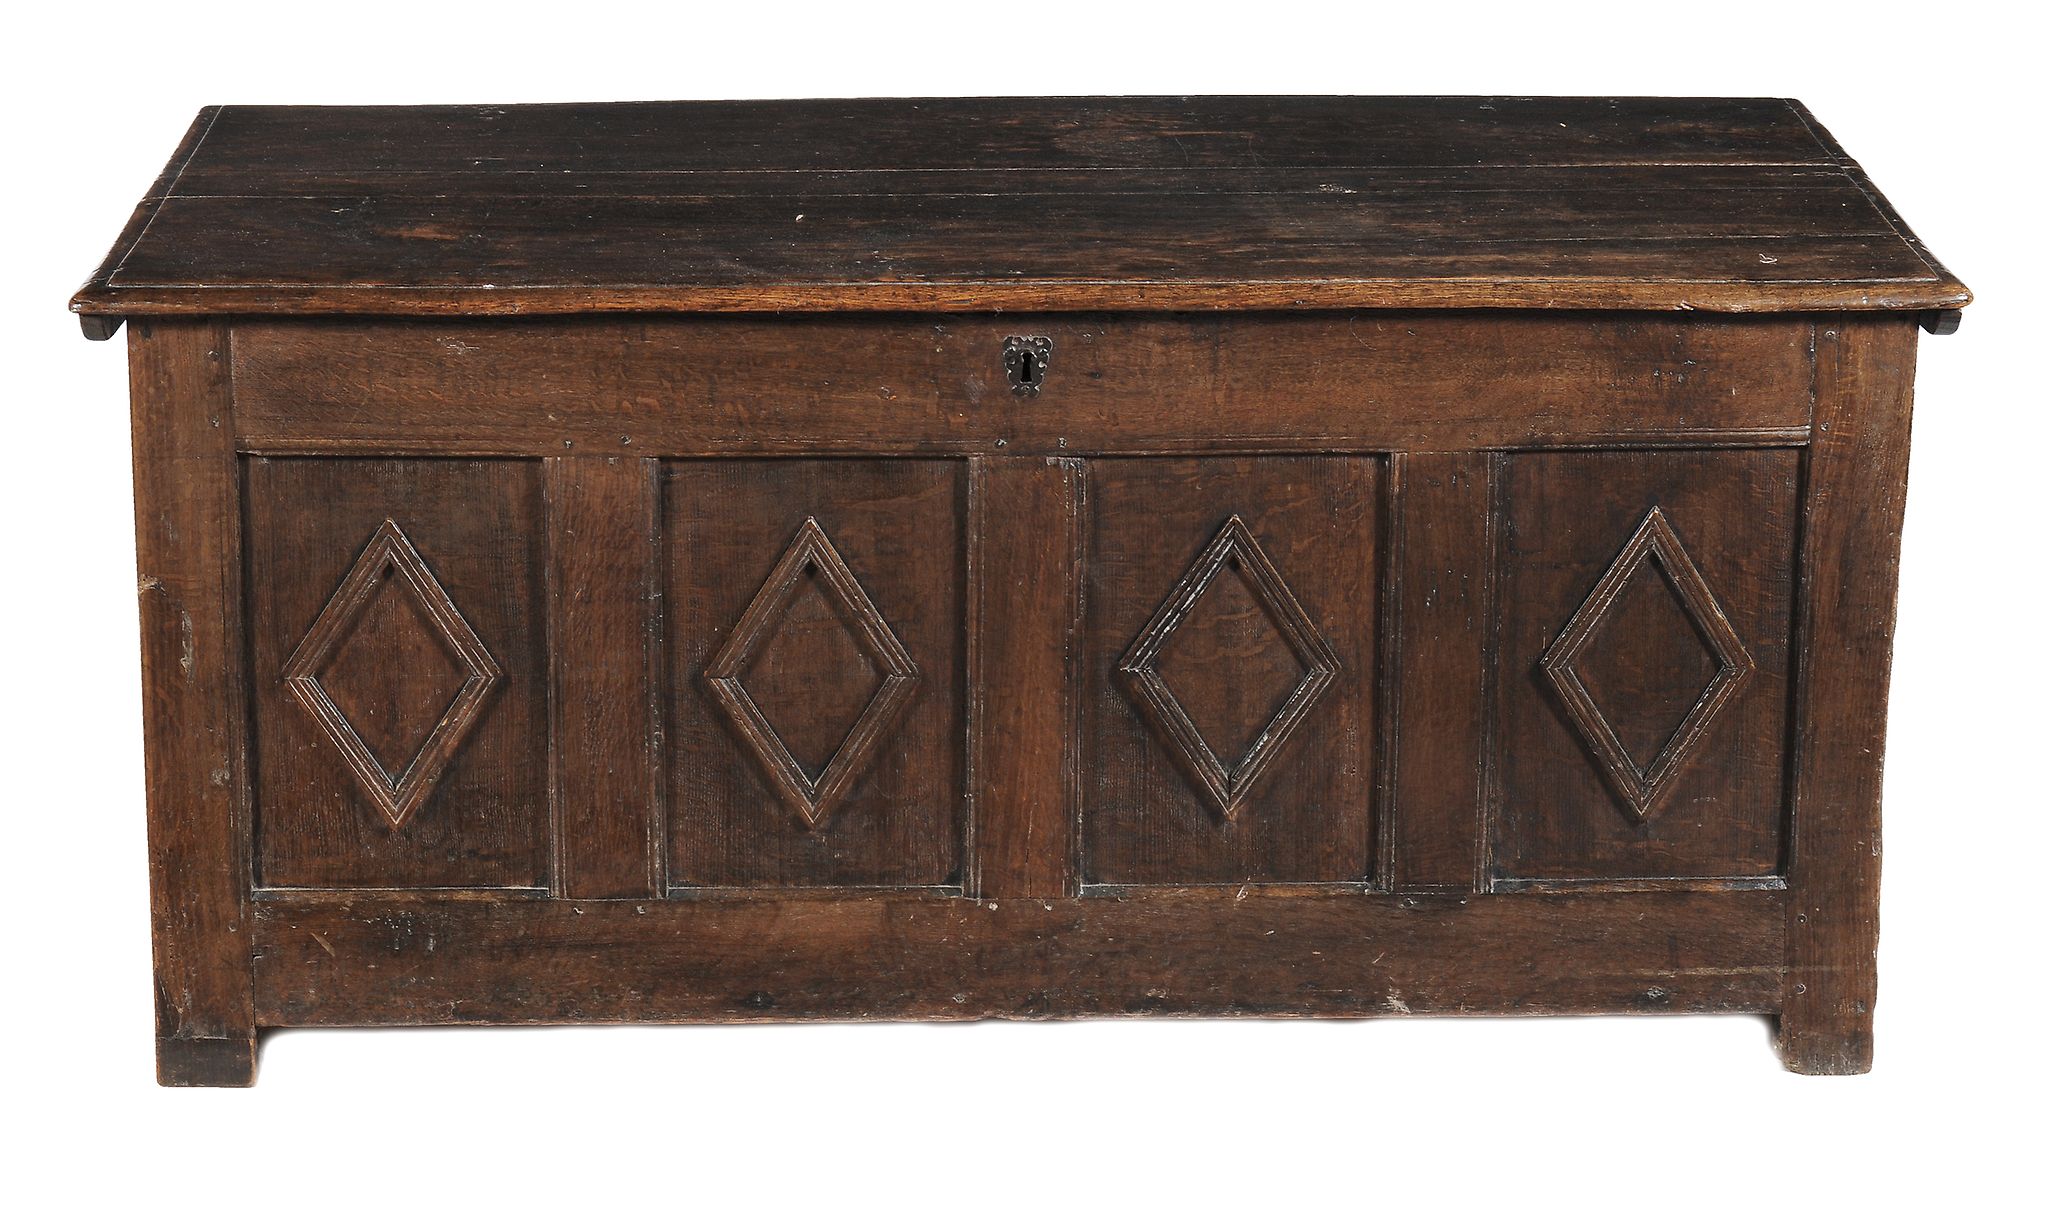 A Charles II oak chest circa 1660 hinged top above a quadruple panel front... A Charles II oak